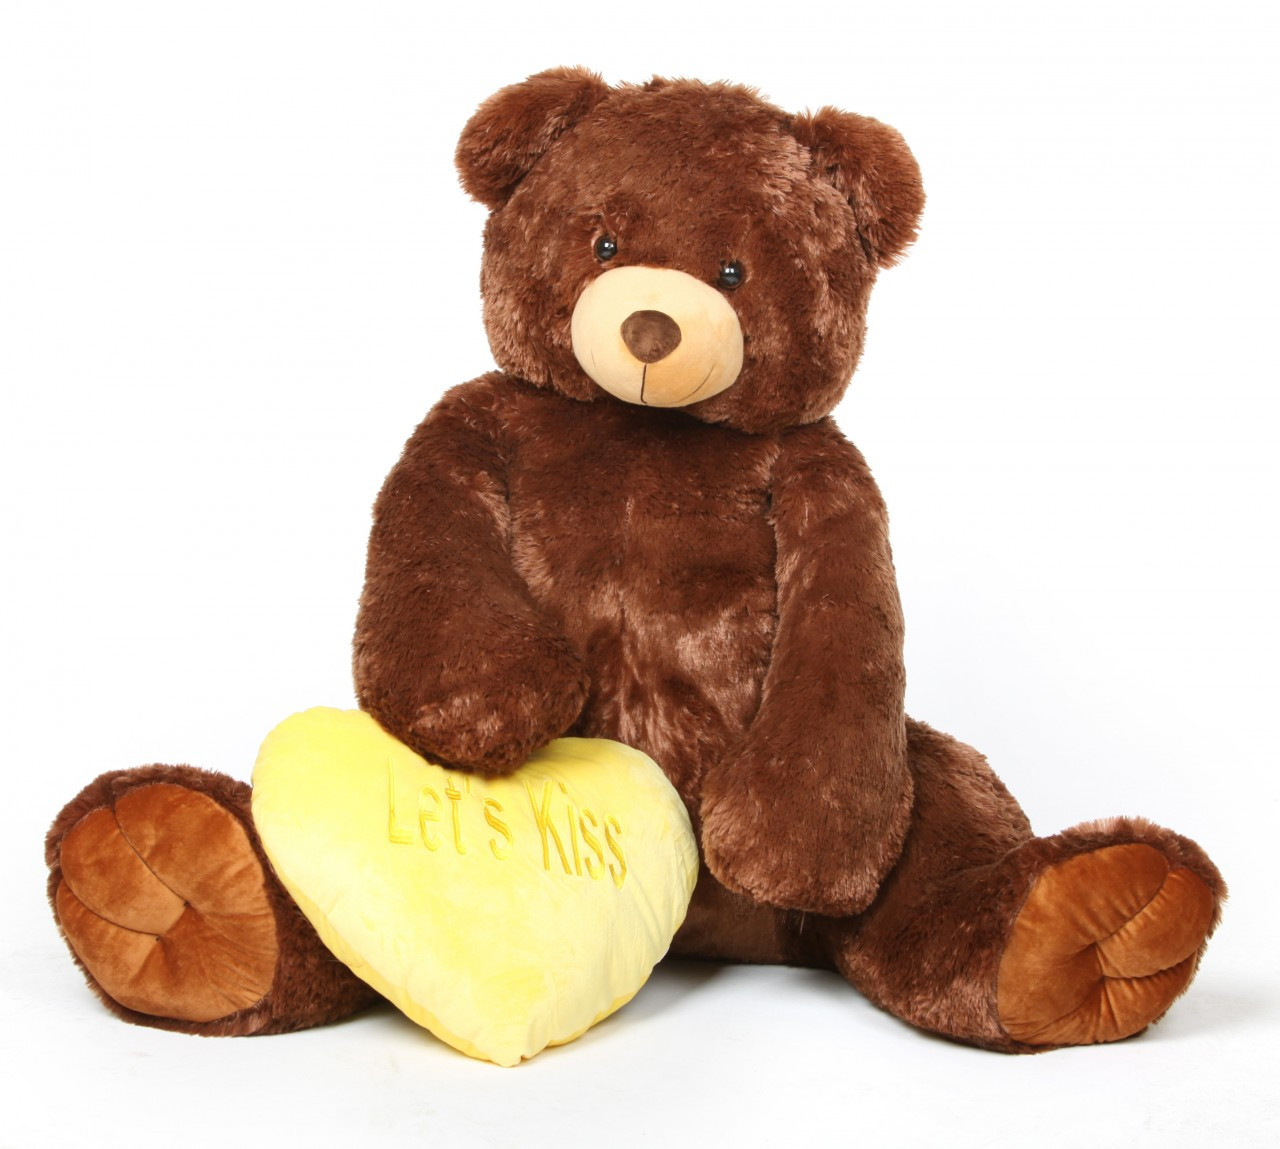 Smooches Heart Tubs dark caramel jumbo teddy bear with yellow Lets Kiss heart 52in